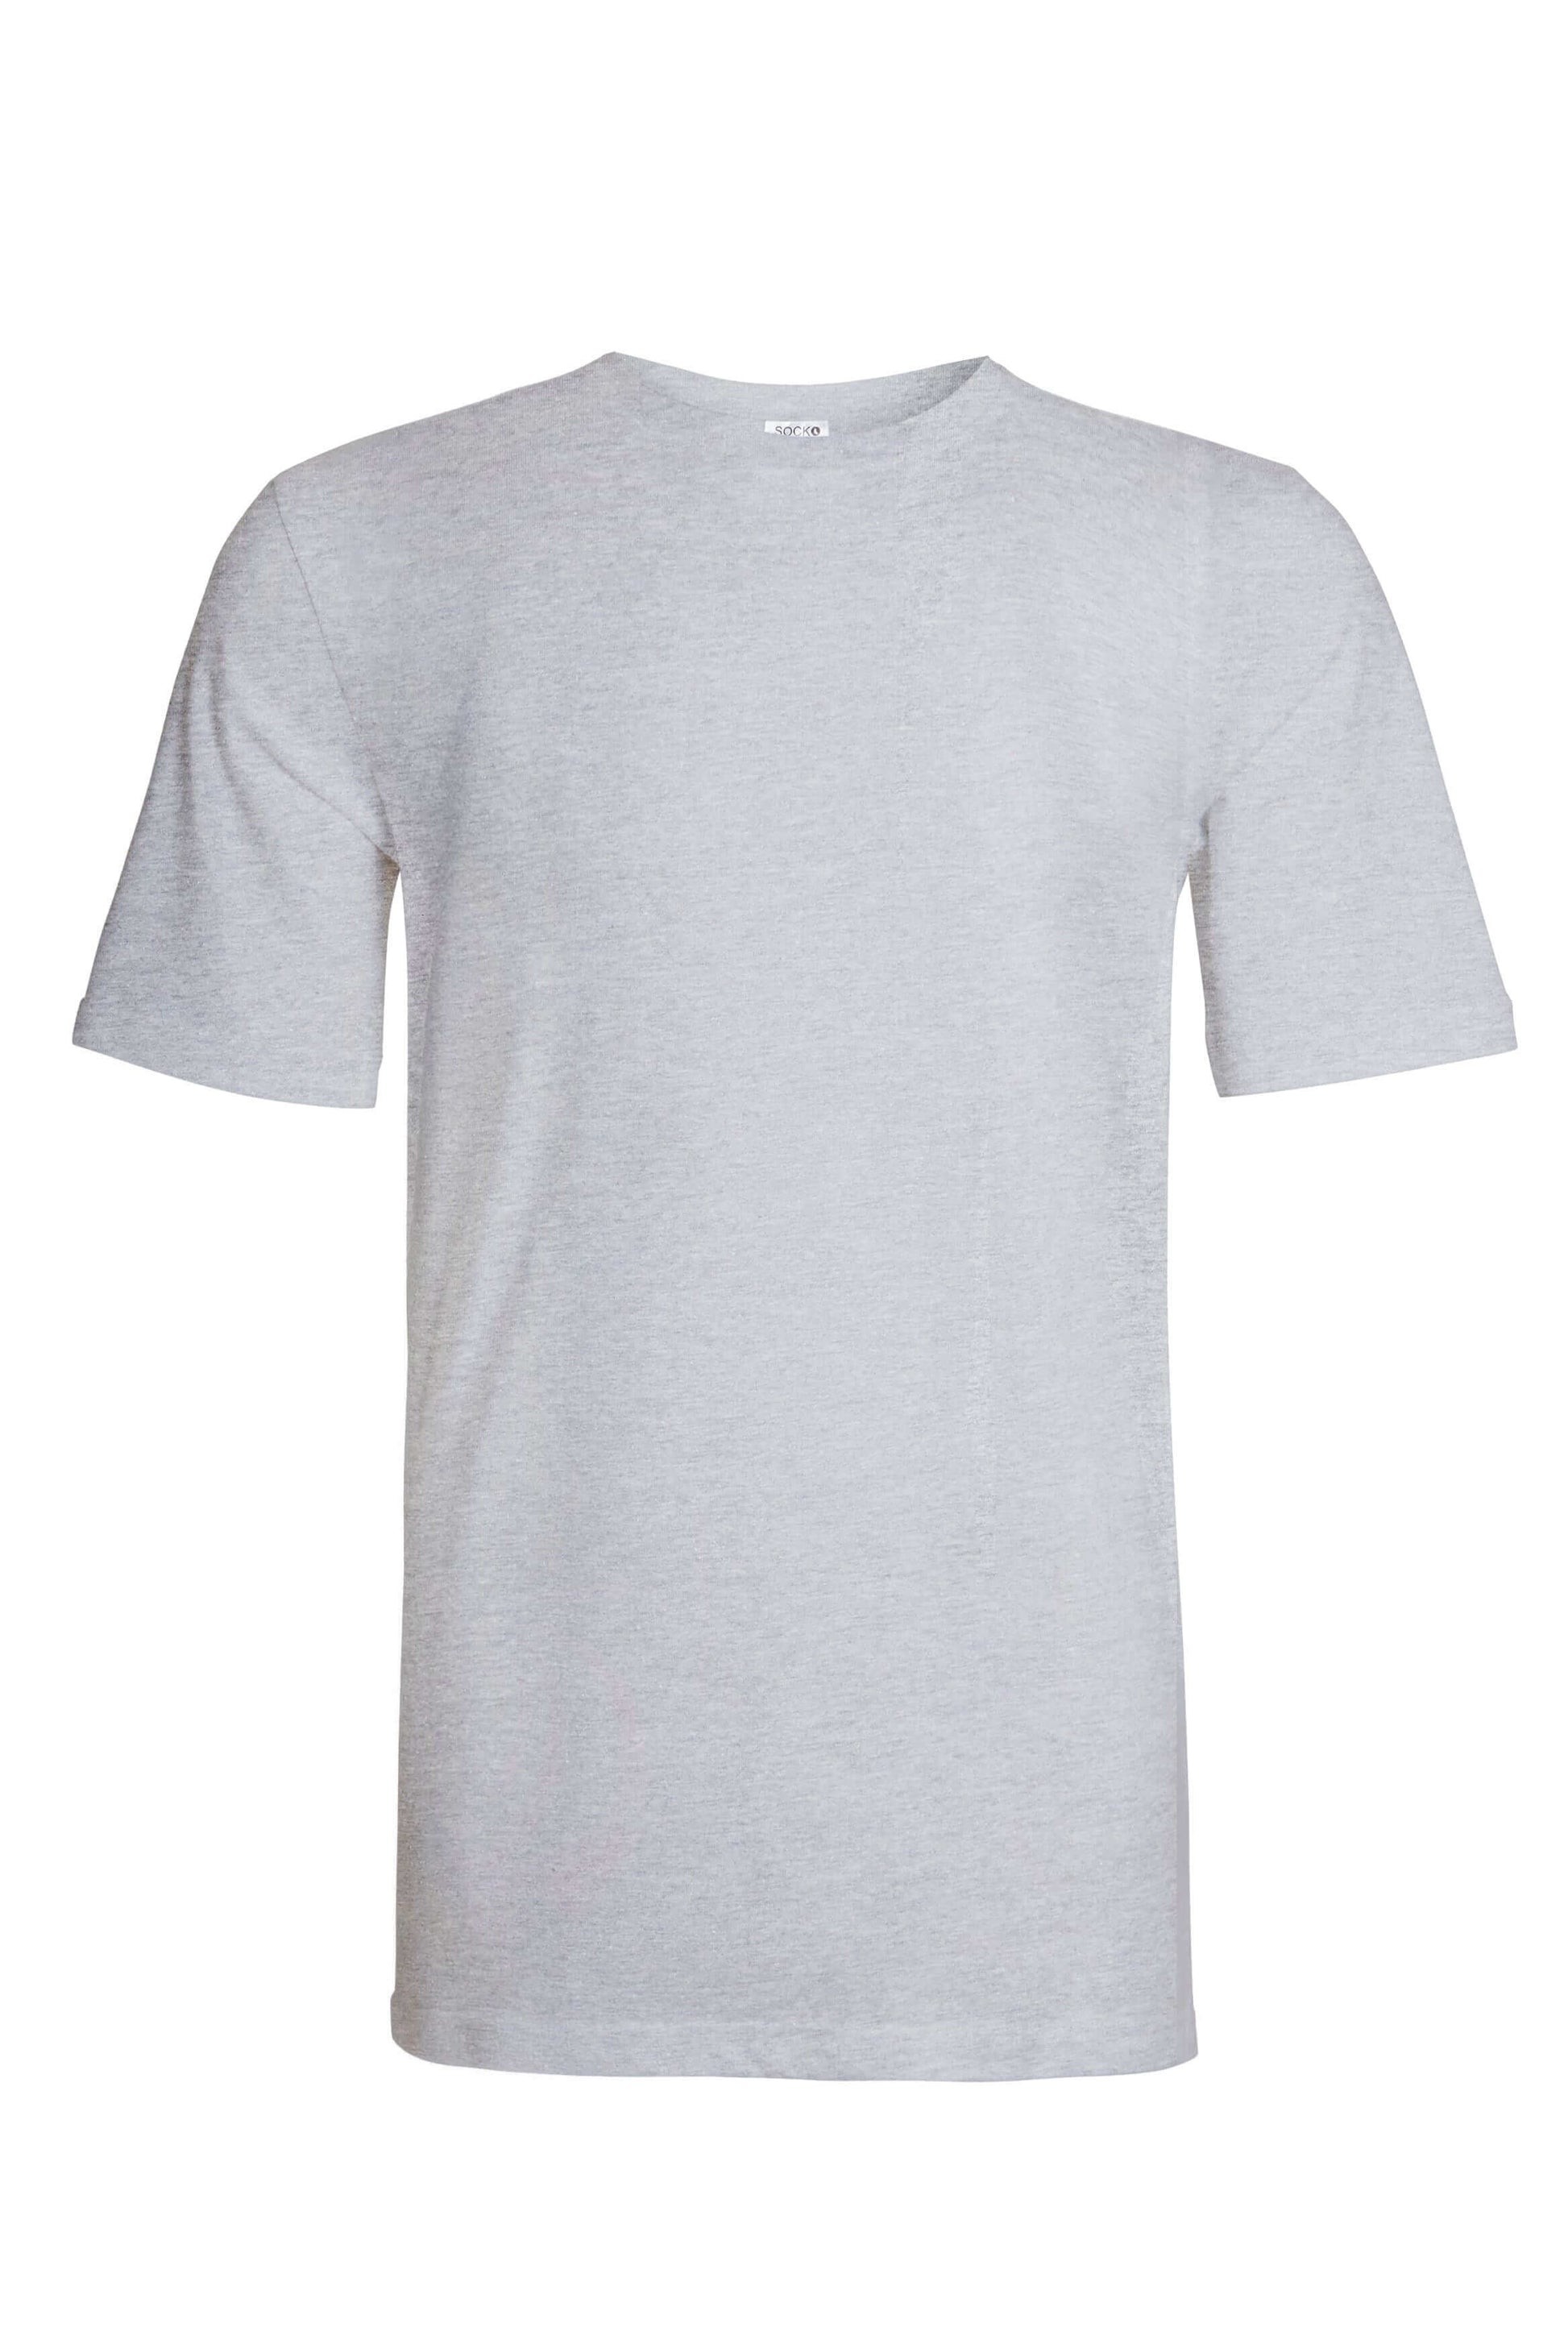 Pack Of 3 Men's Plain T Shirt, Slim Fit Summer T Shirt. Buy now for £10.00. A T-Shirts by Sock Stack. baselayer, black, grey, gym, hiking, large, long johns, long sleeve, marl grey, medium, mens, navy, outdoor, pants, running, small, sports, t-shirt, tops